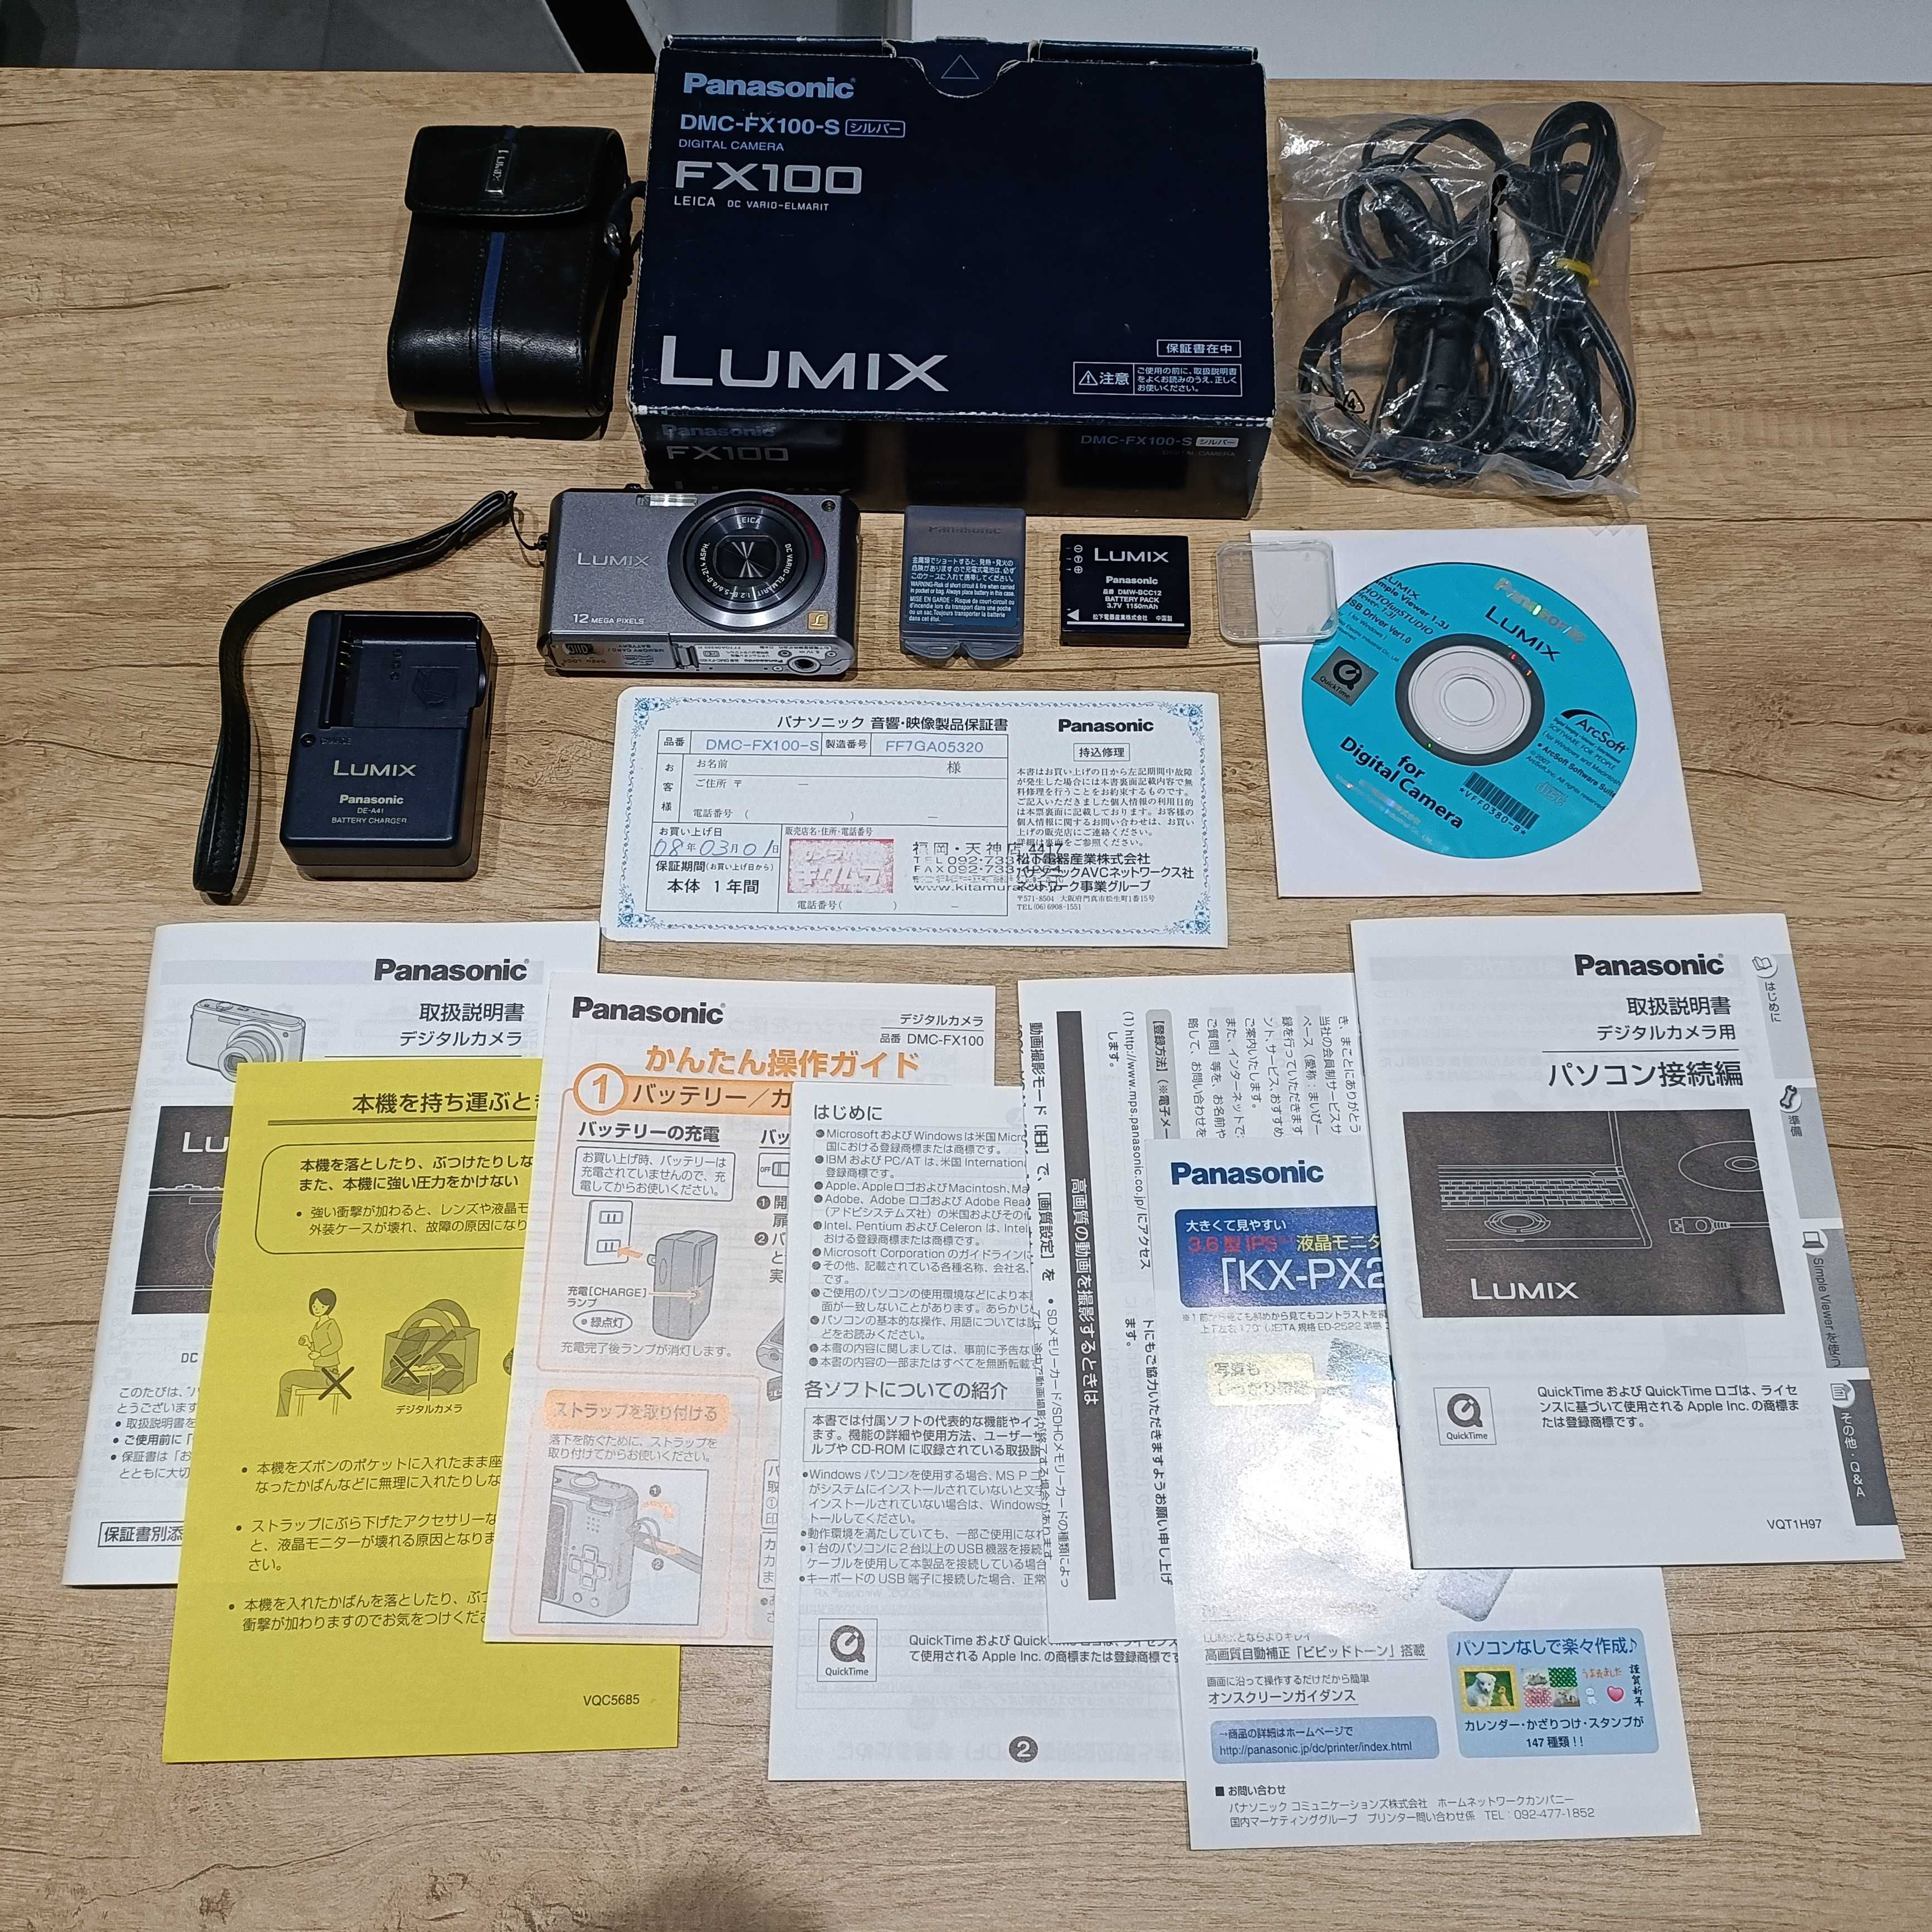 Panasonic Lumix DMC-FX100-S